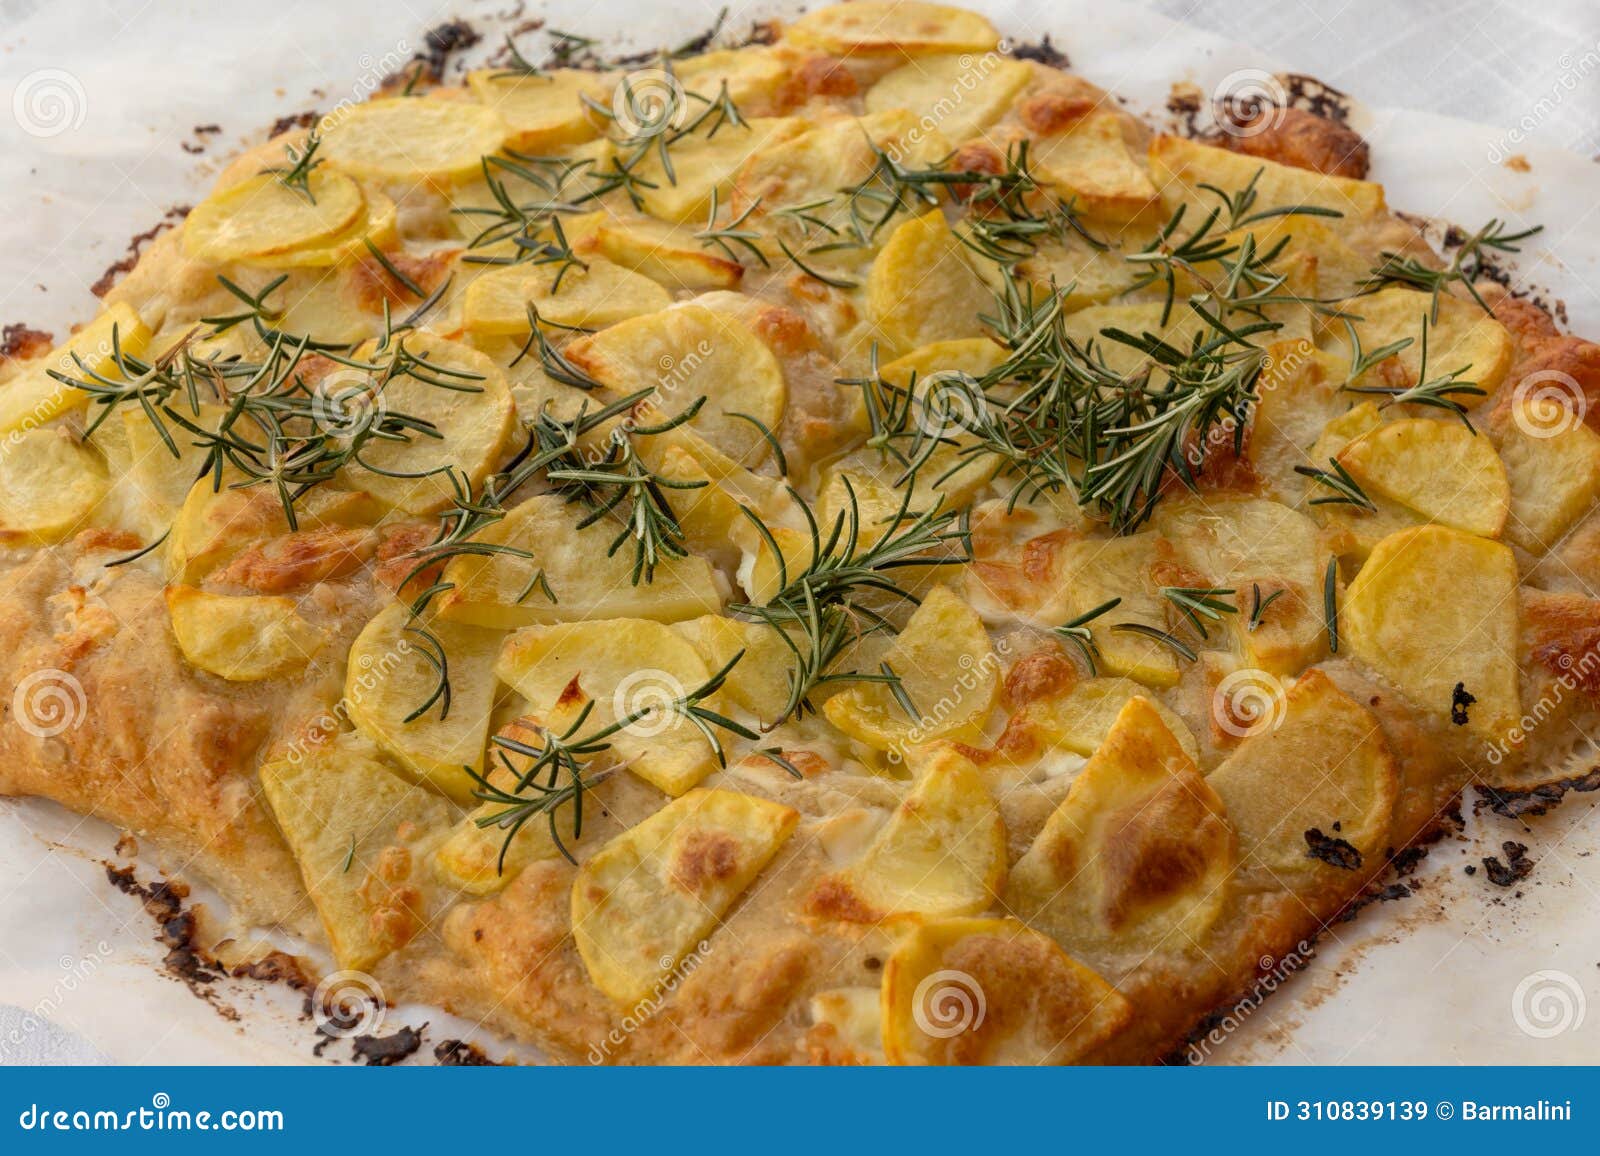 fresh baked focaccia or pala romana pizza with potato vegetables and rosemary in bakery in parma, emilia romania, italy